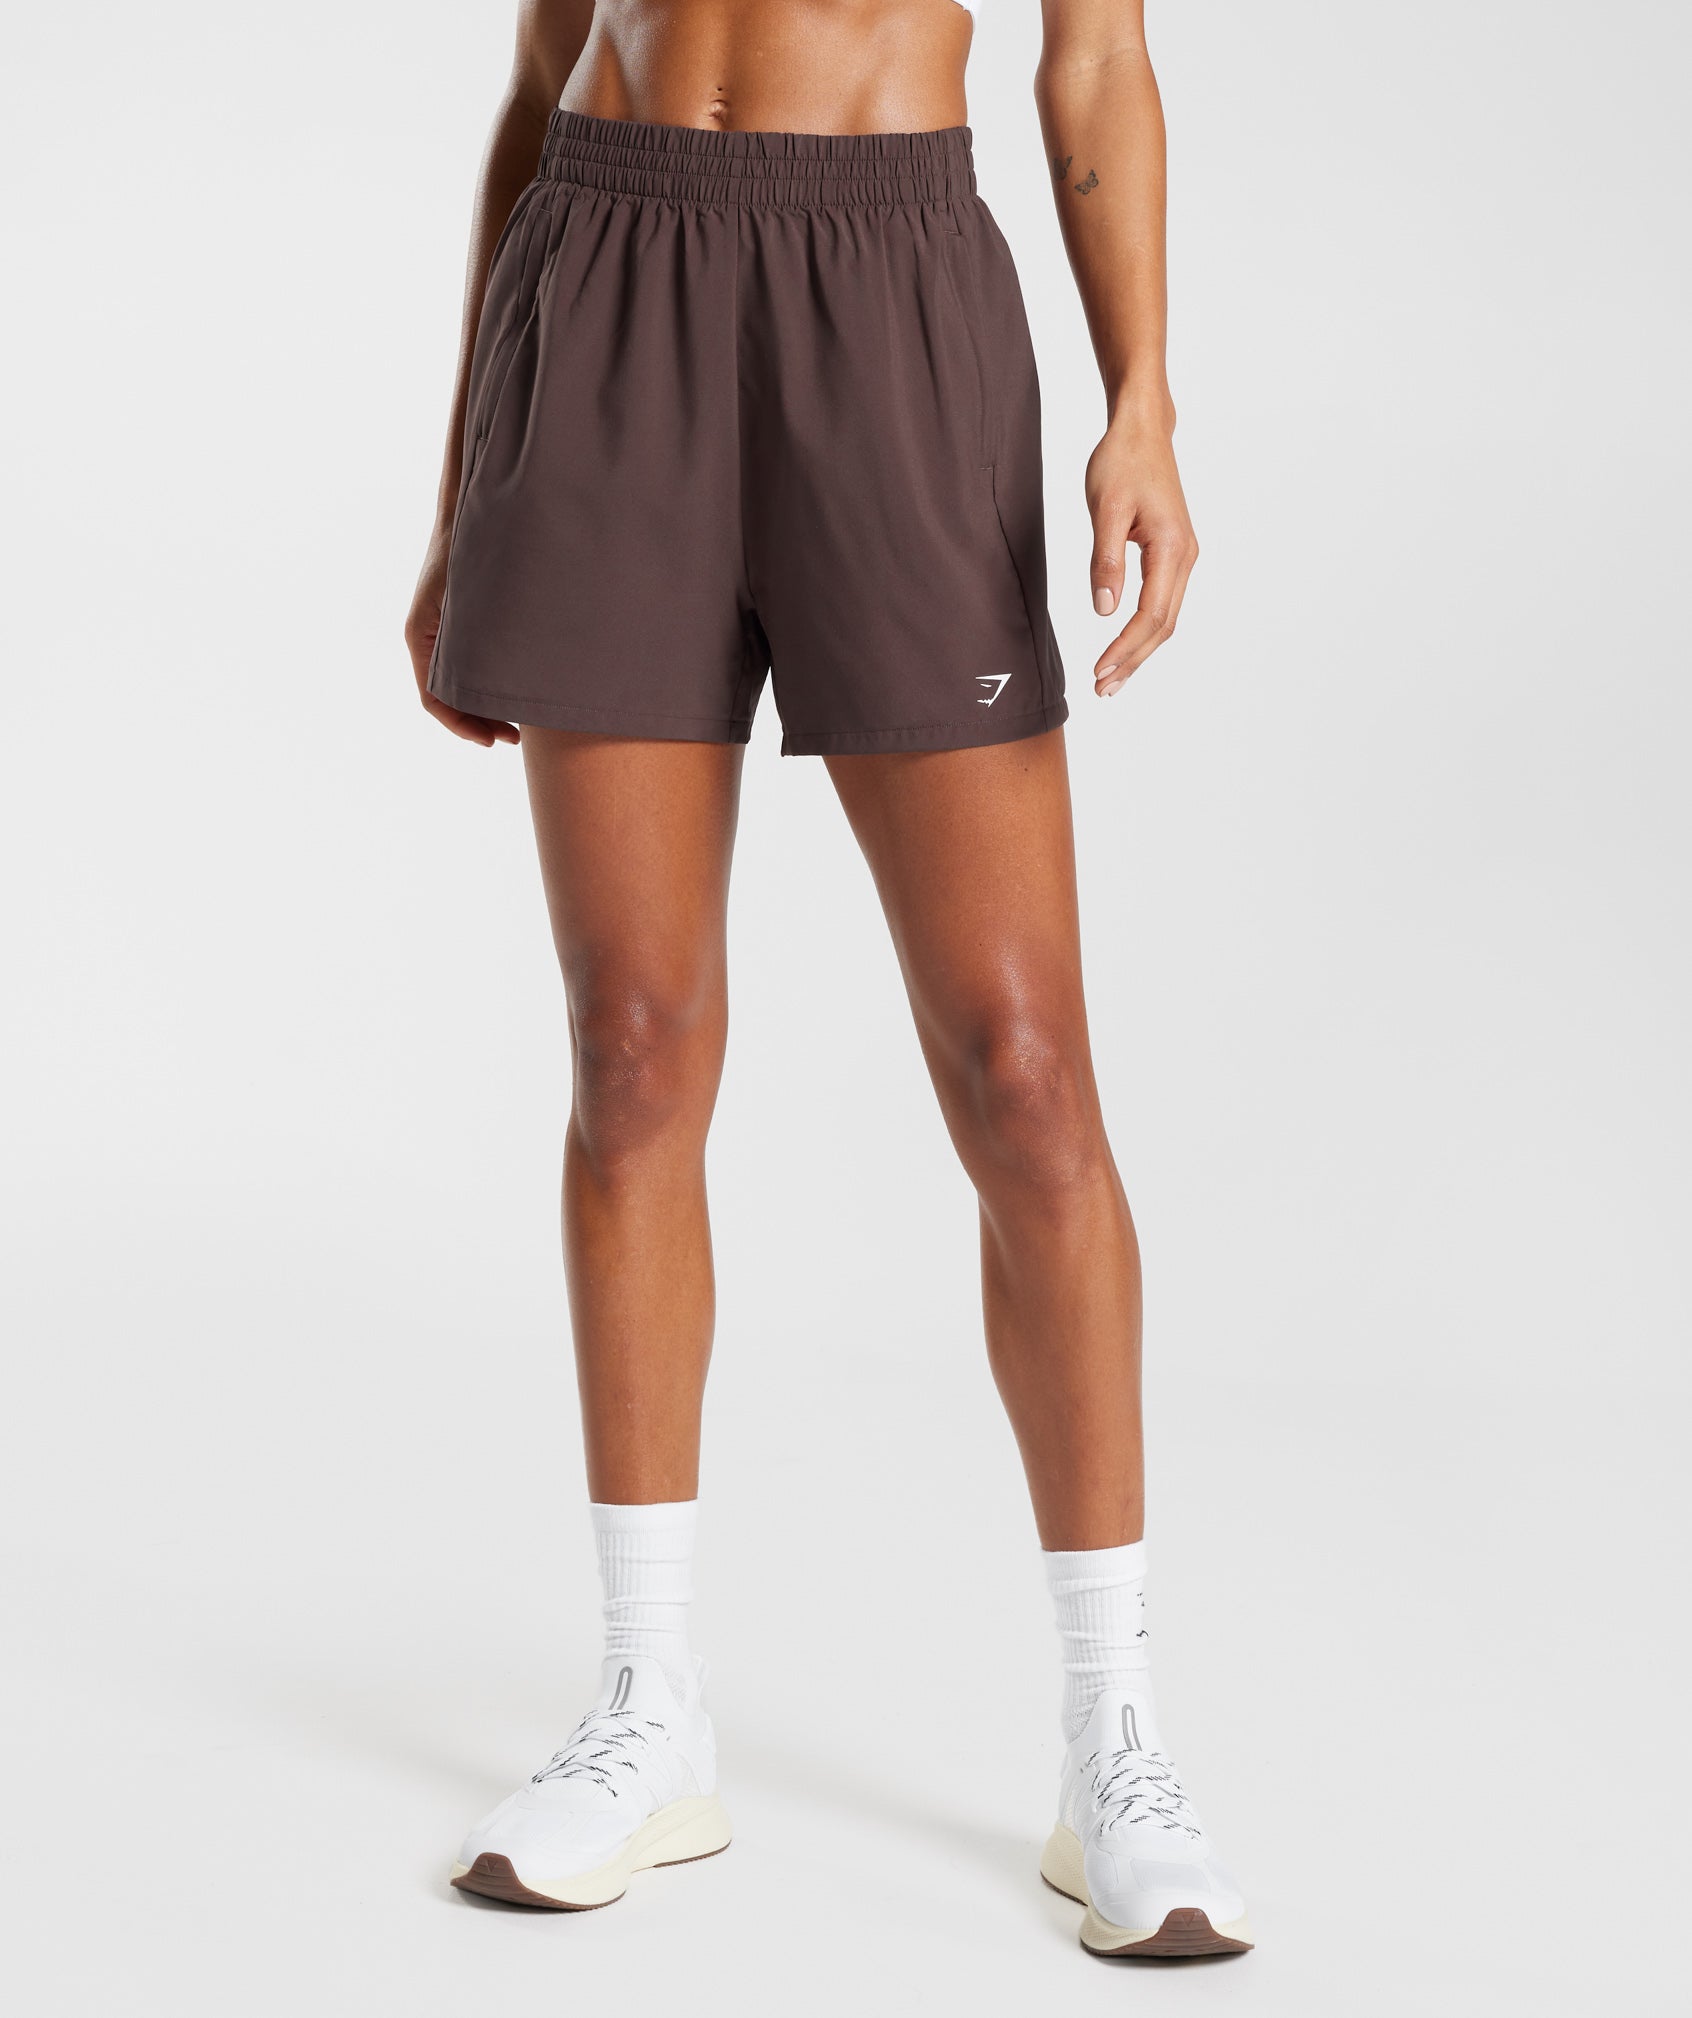 Women's Running Shorts Elastic High Waisted Shorts Pocket Sporty Workout  Shorts Quick Dry Athletic Shorts Pants-pink